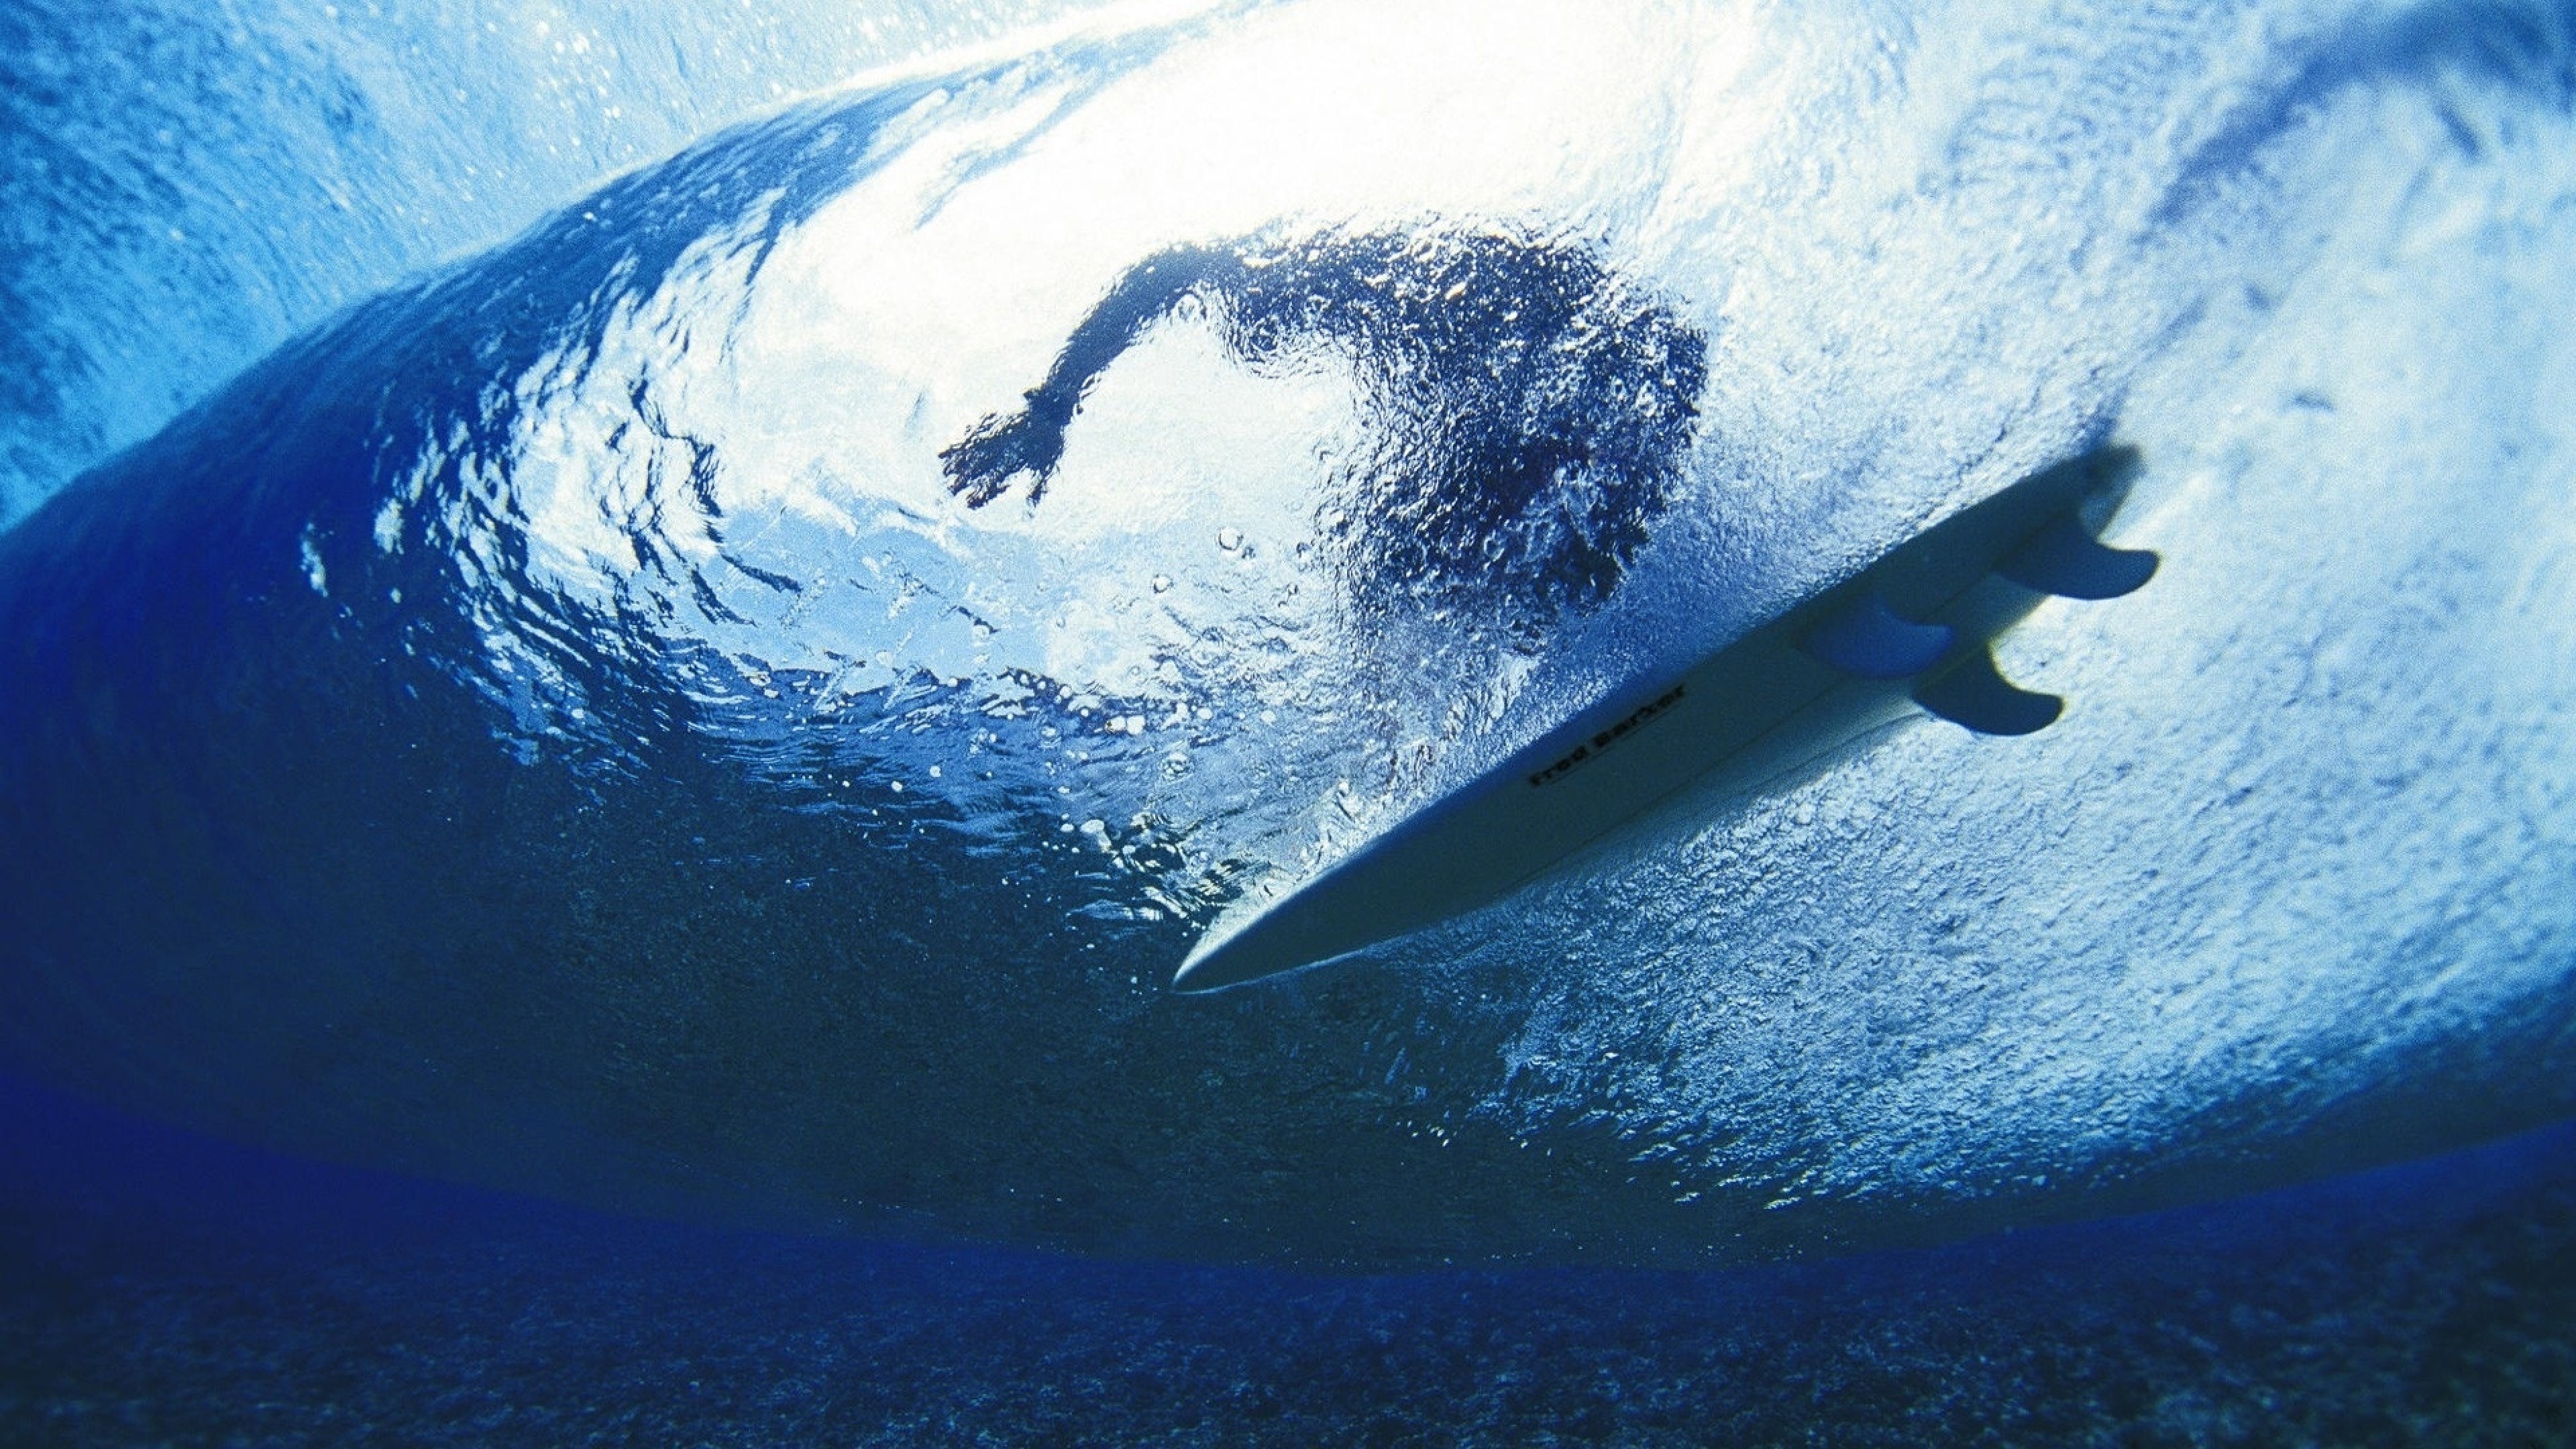  Surfing Surfer Water Depth Wallpaper Background 4K Ultra HD